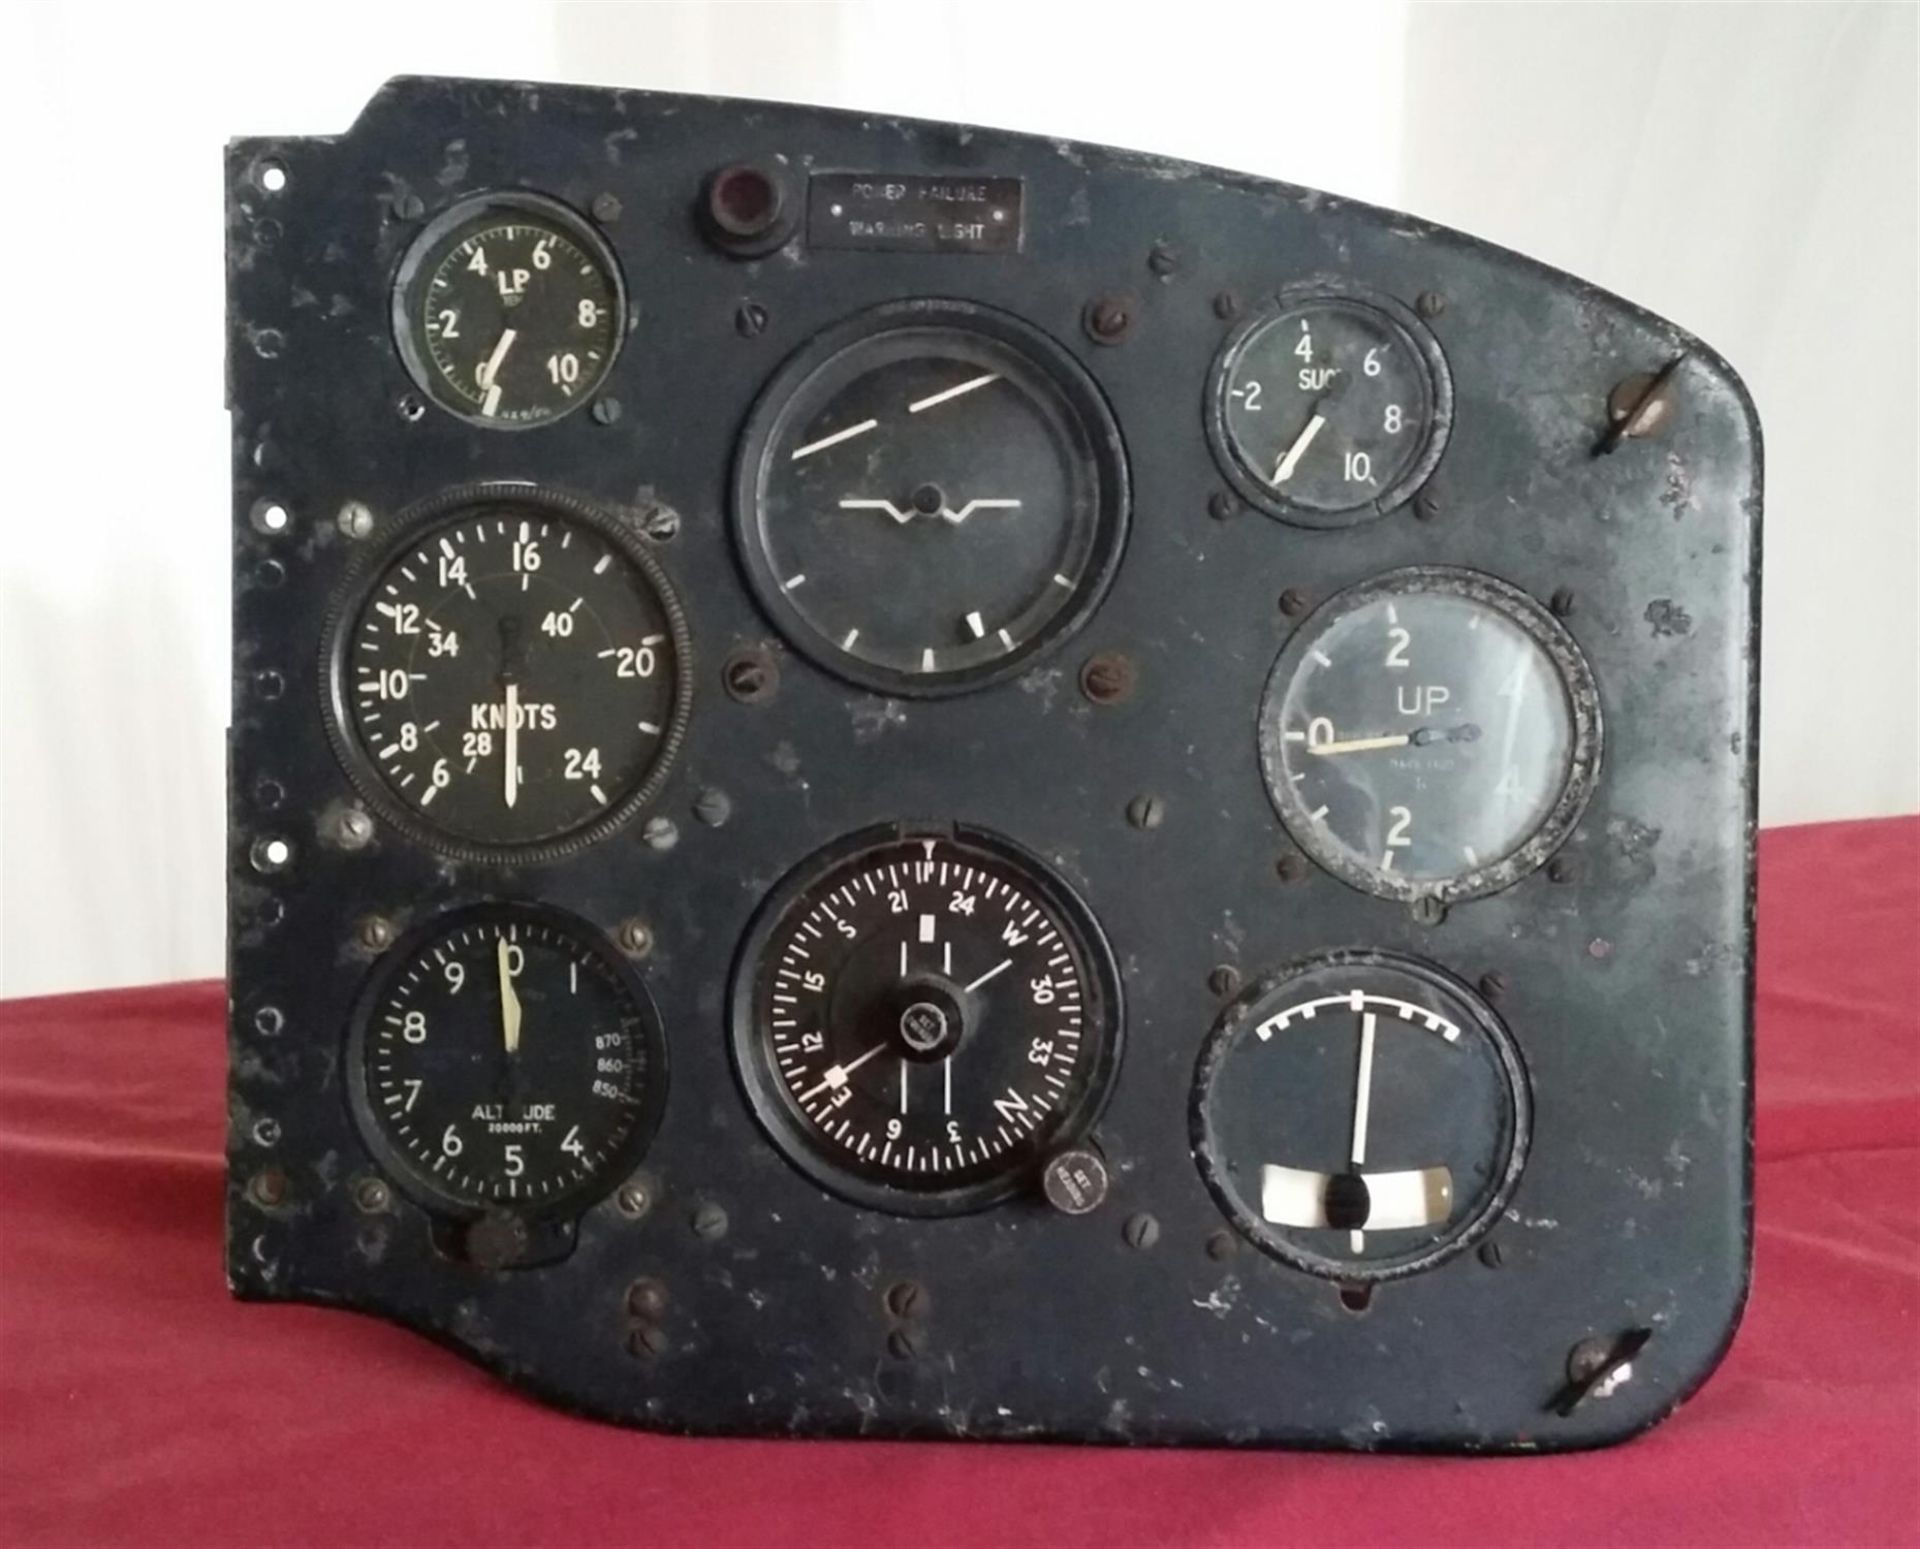 c1955 RAF Piston Provost. Complete original Co-Pilot's Instrument Panel